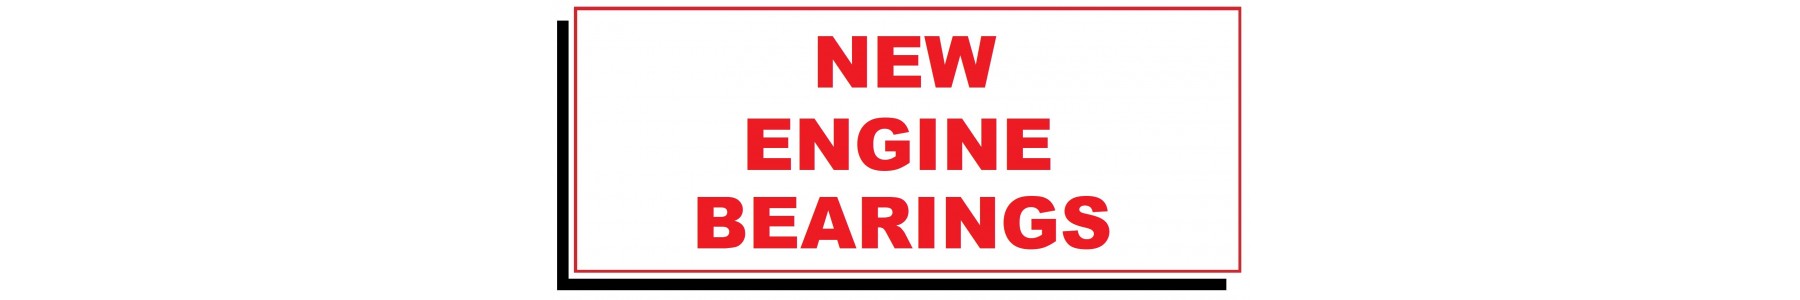 NEW ENGINE BEARINGS